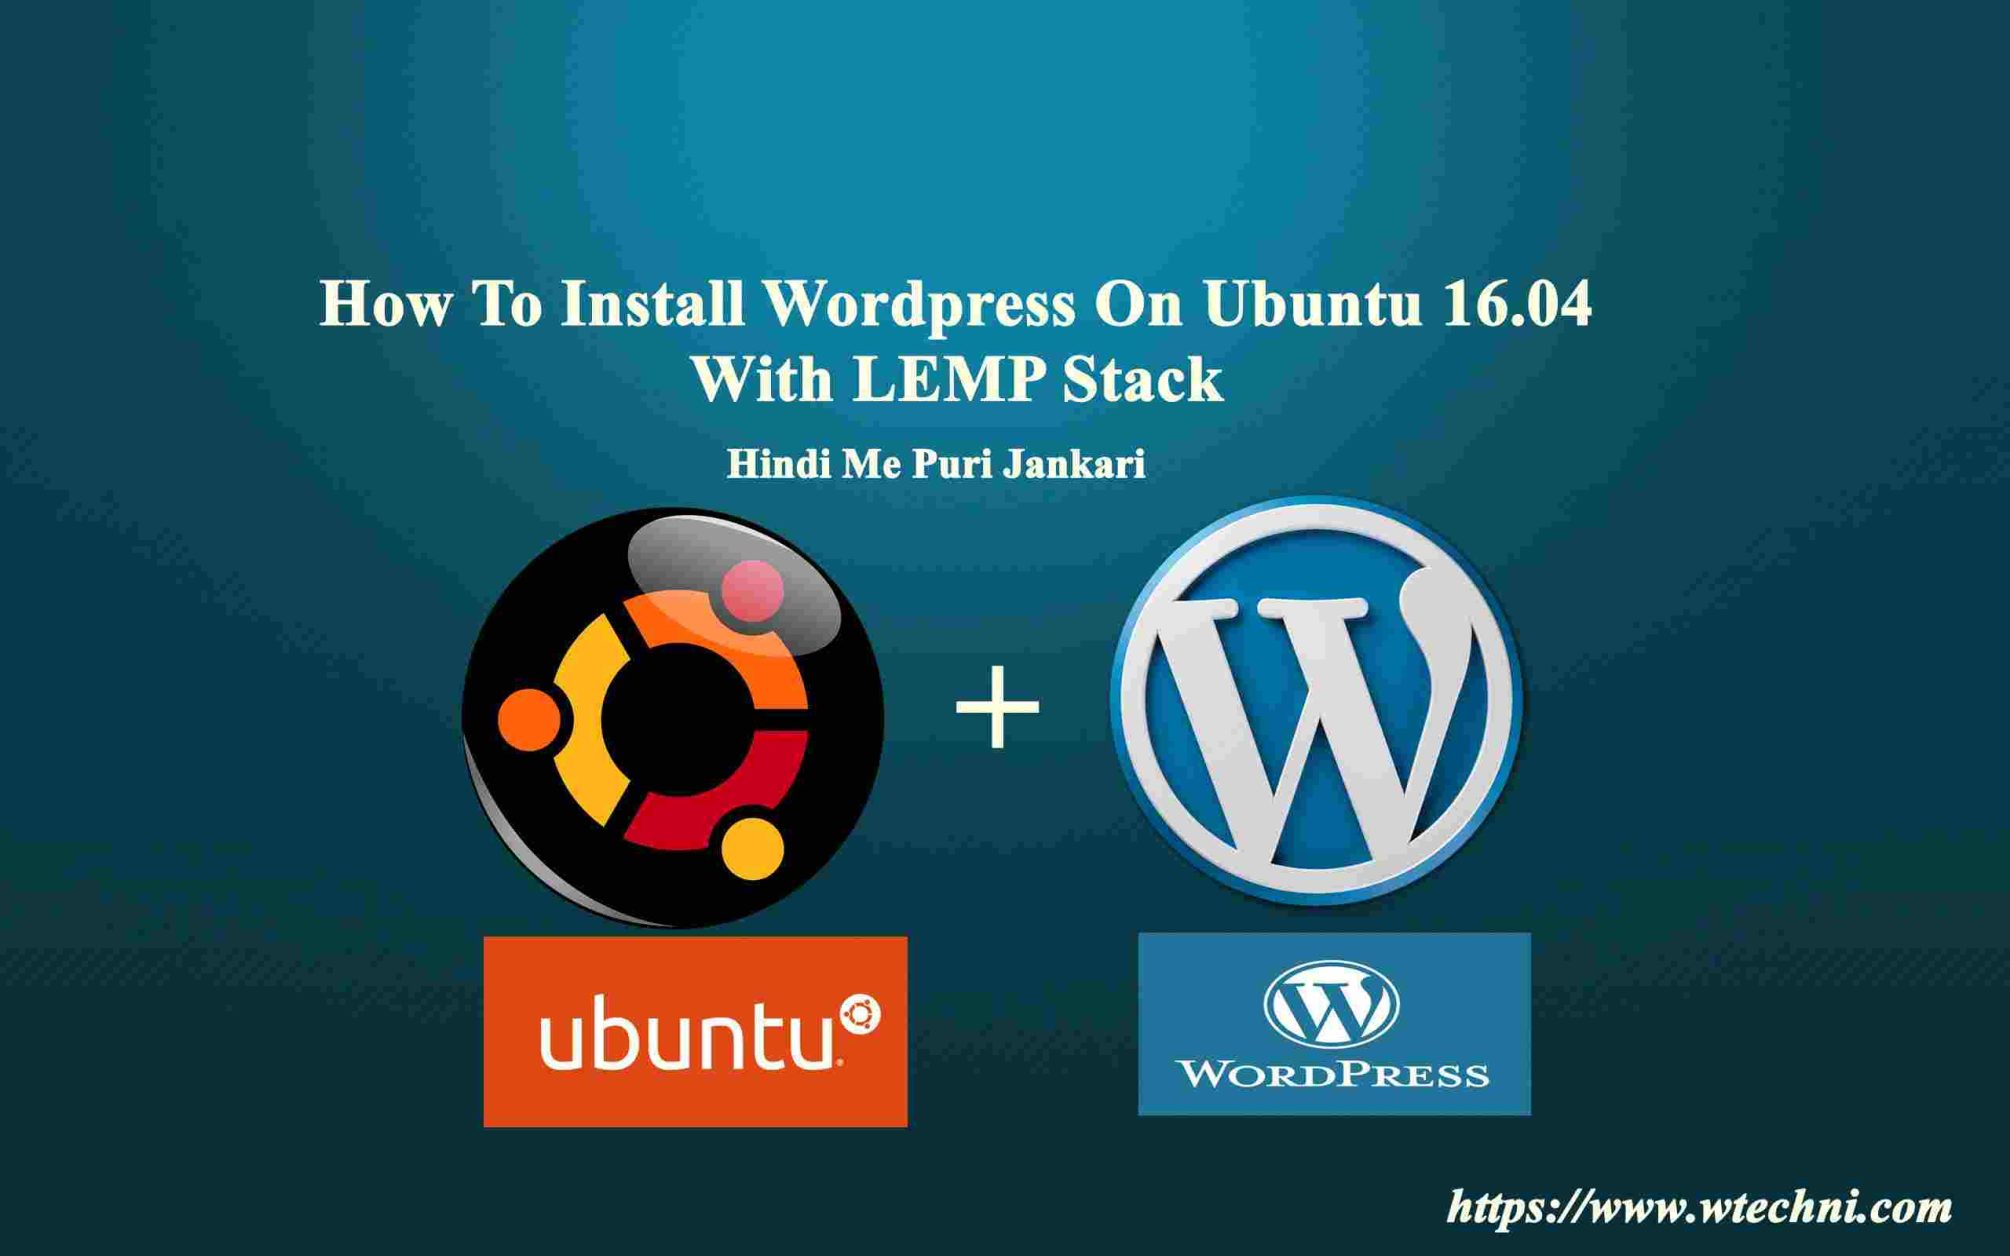 wordpress install on ubuntu with LEMP stack